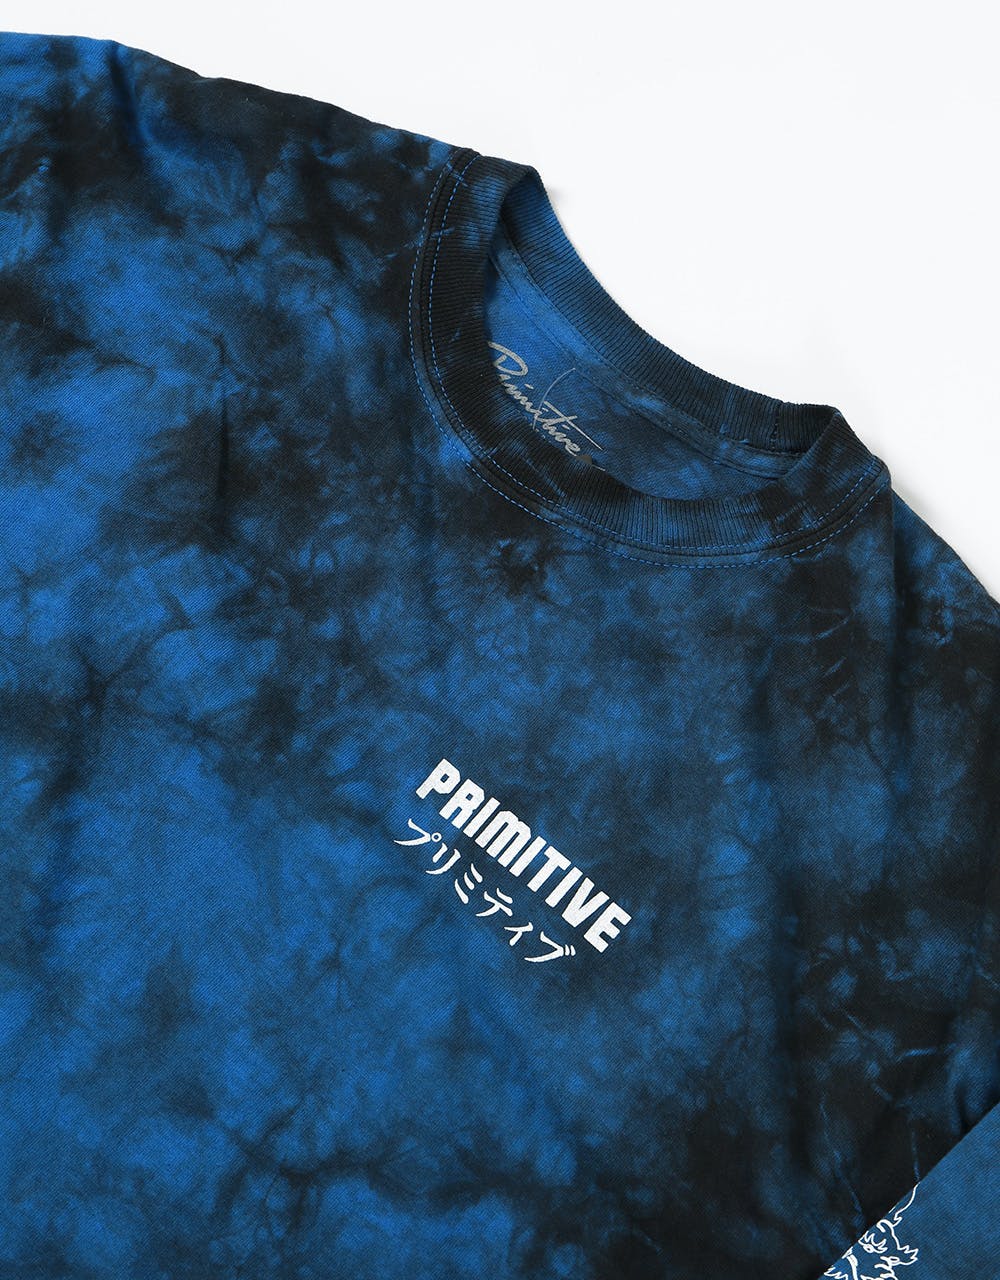 Primitive Dynasty L/S T-Shirt - Navy Black